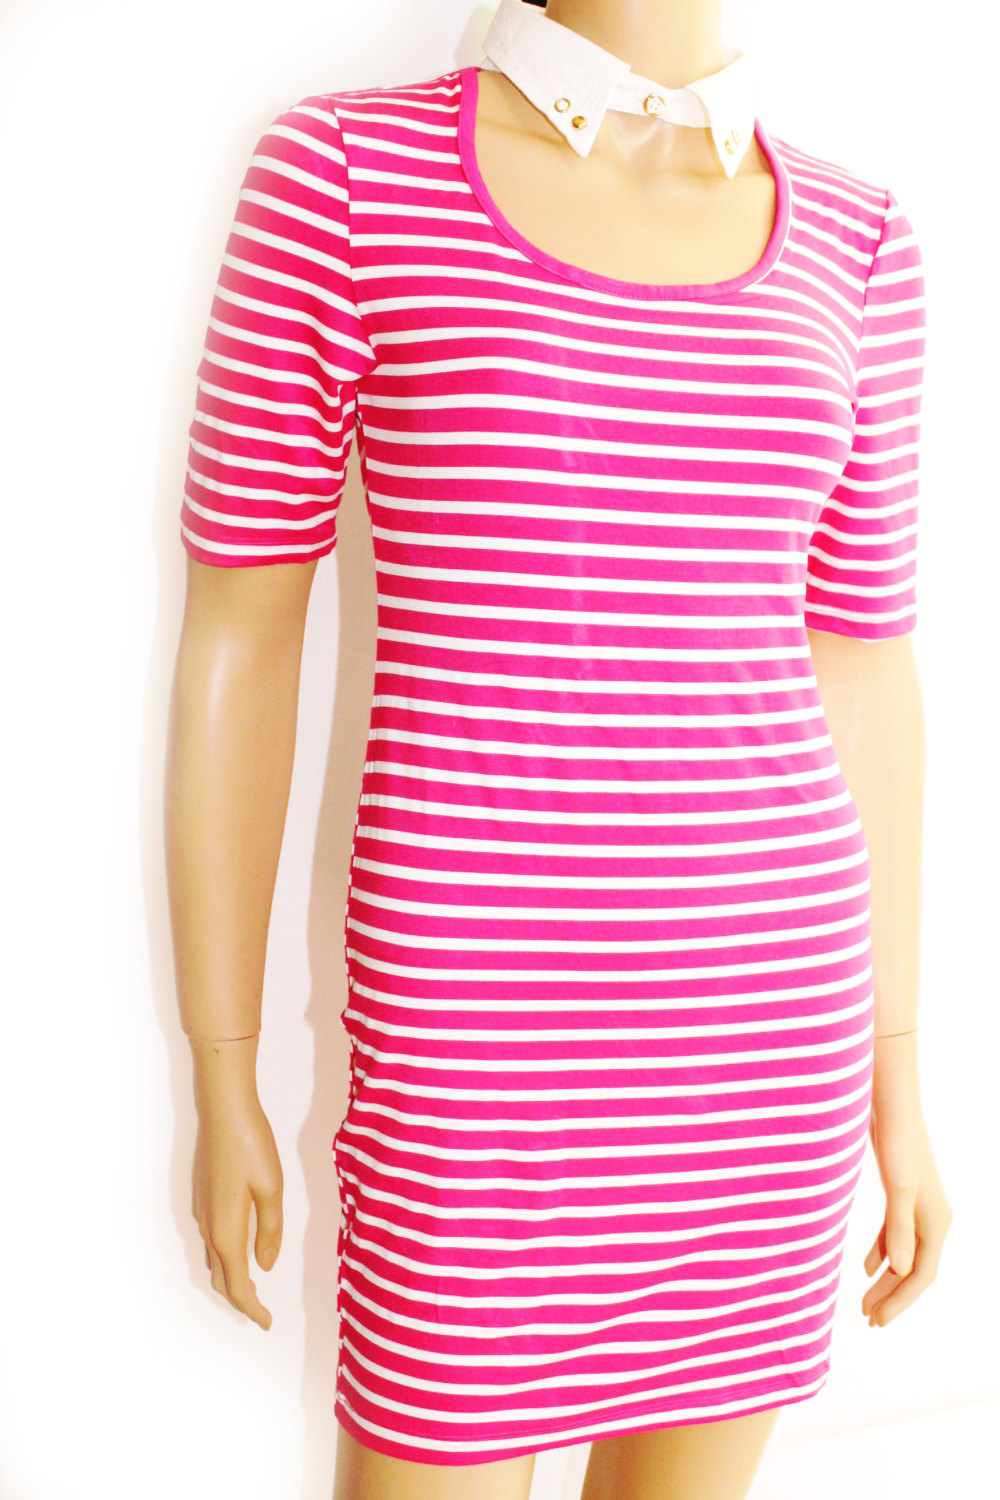 Pink and white / cotton/ women's Striped casual /mini dress/ tunic